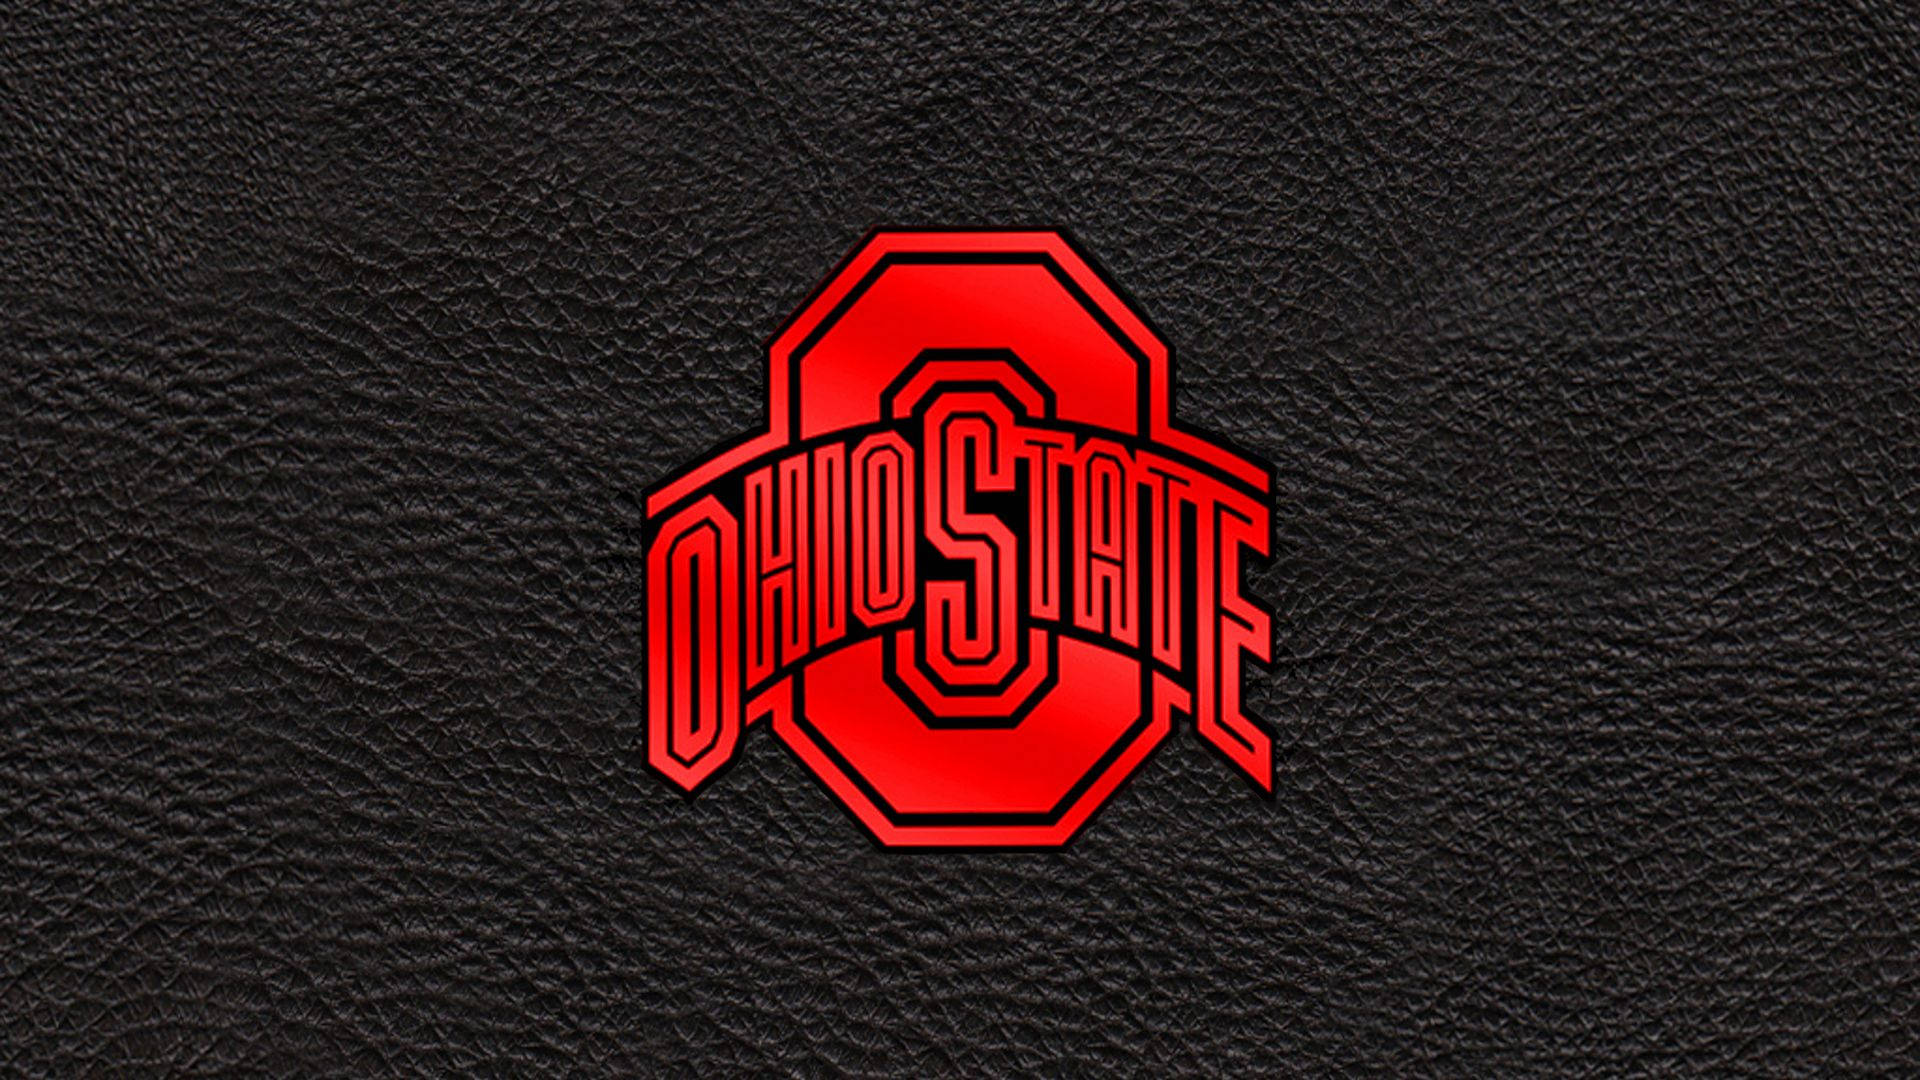 Ohio State Buckeyes Football Game Logo Wallpaper